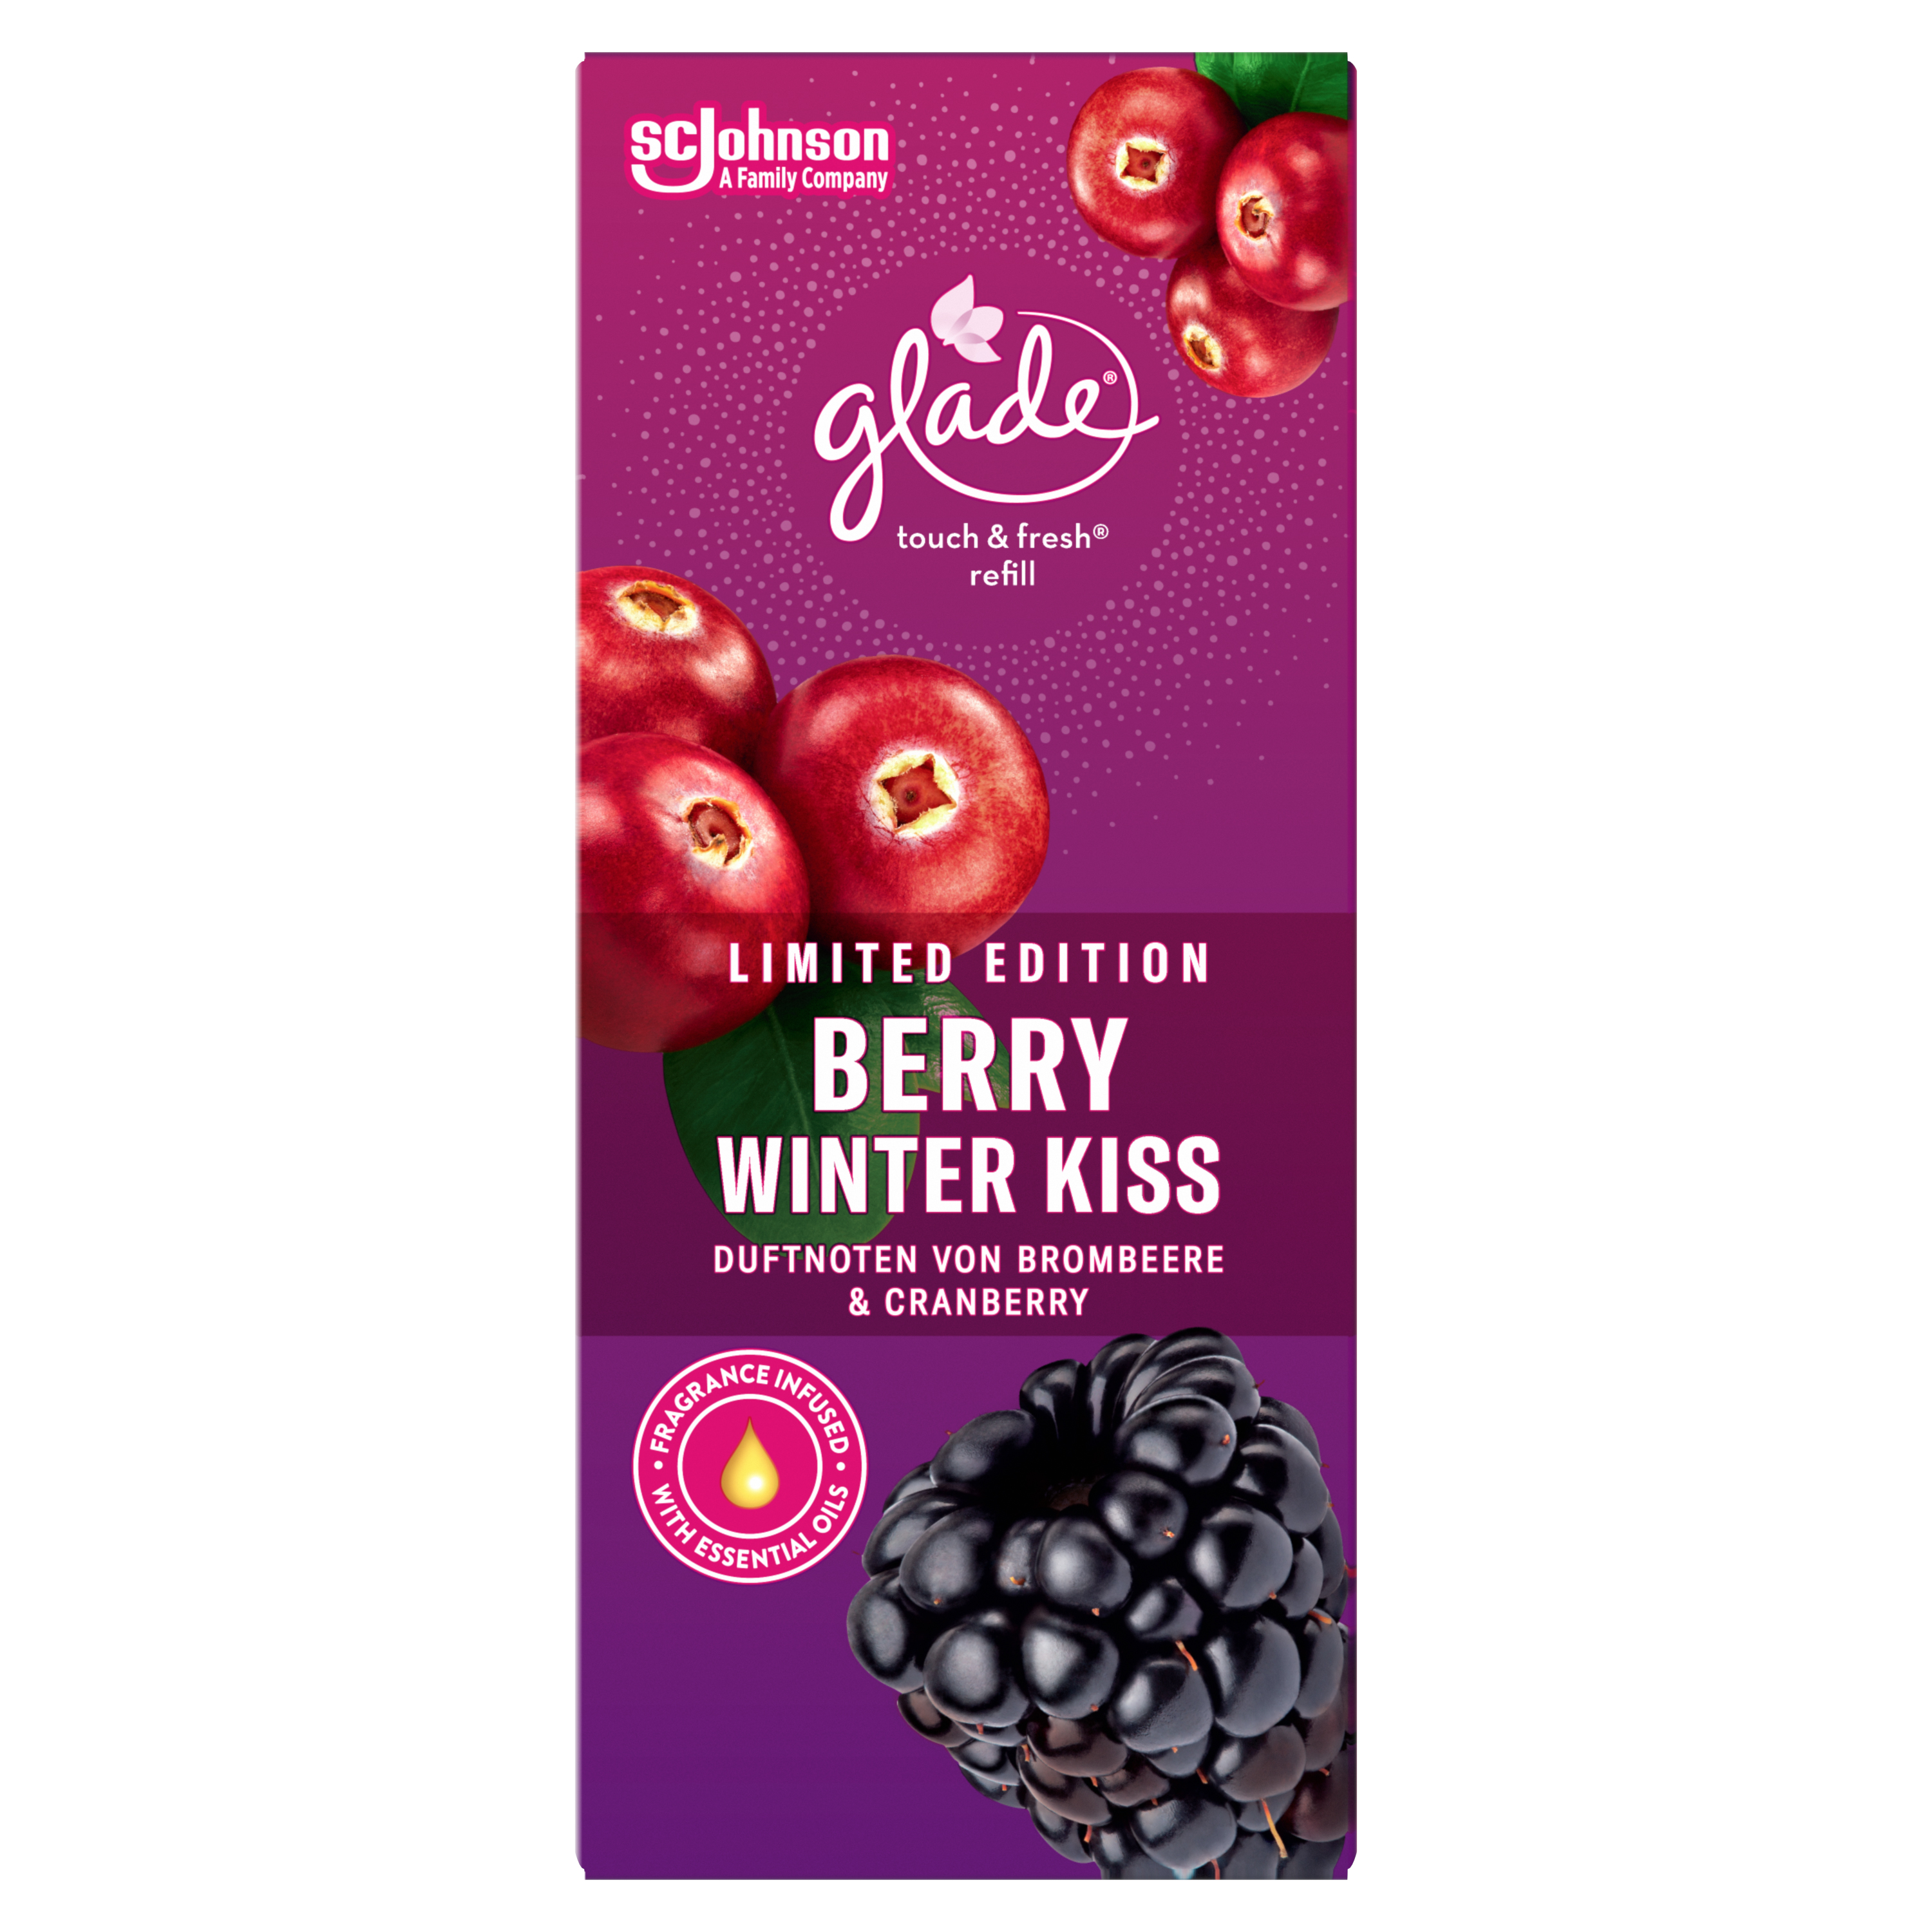 Glade® touch & fresh Nachfüller Berry Winter Kiss